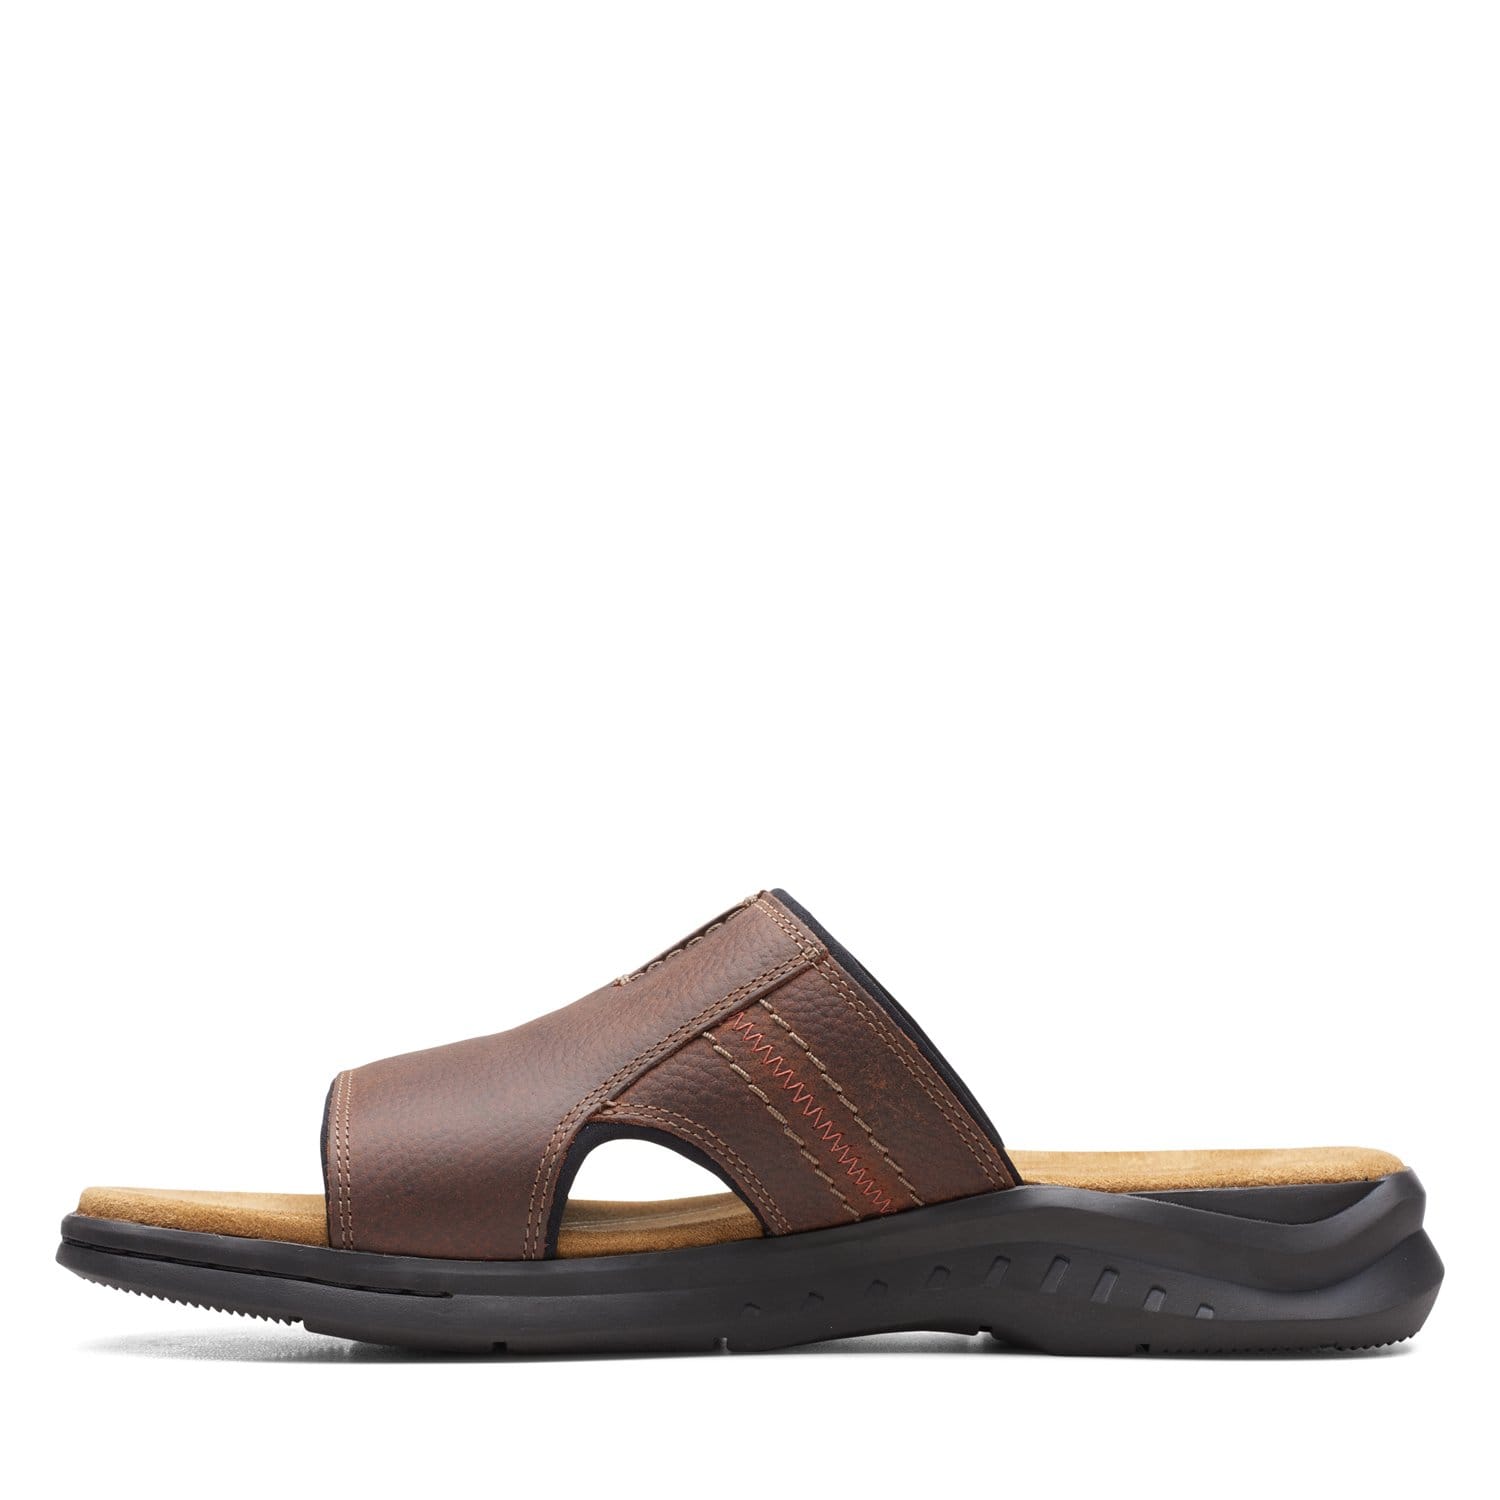 Clarks Hapsford Slide - Sandals - Brown Tumb - 261580867 - G Width (Standard Fit)